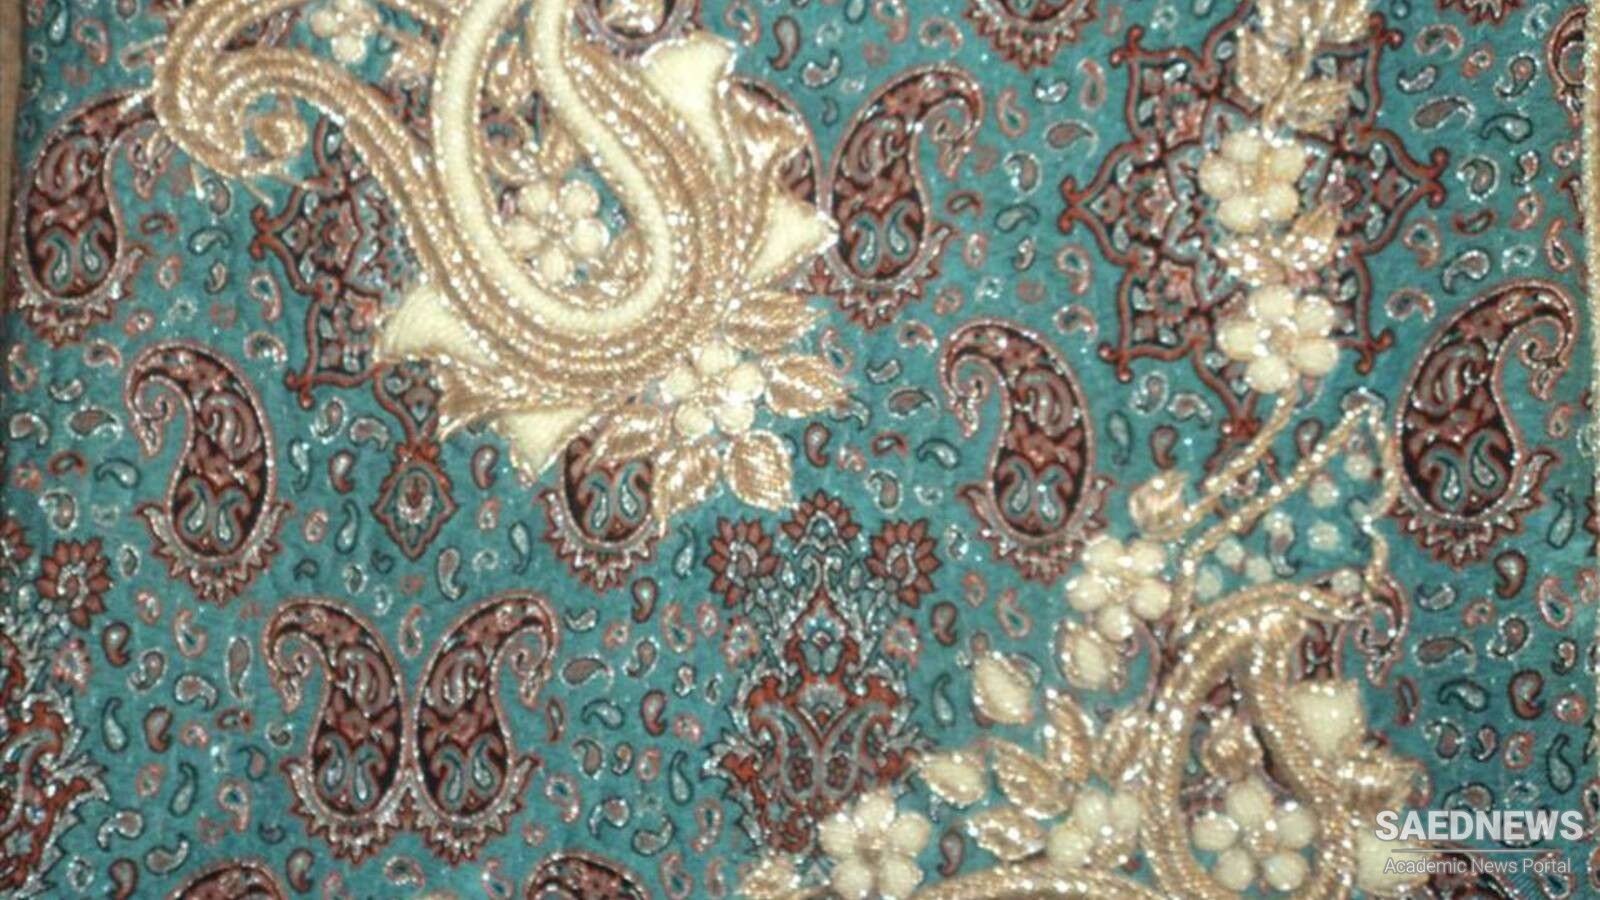 Termeh, Luxurious Royal Fabric